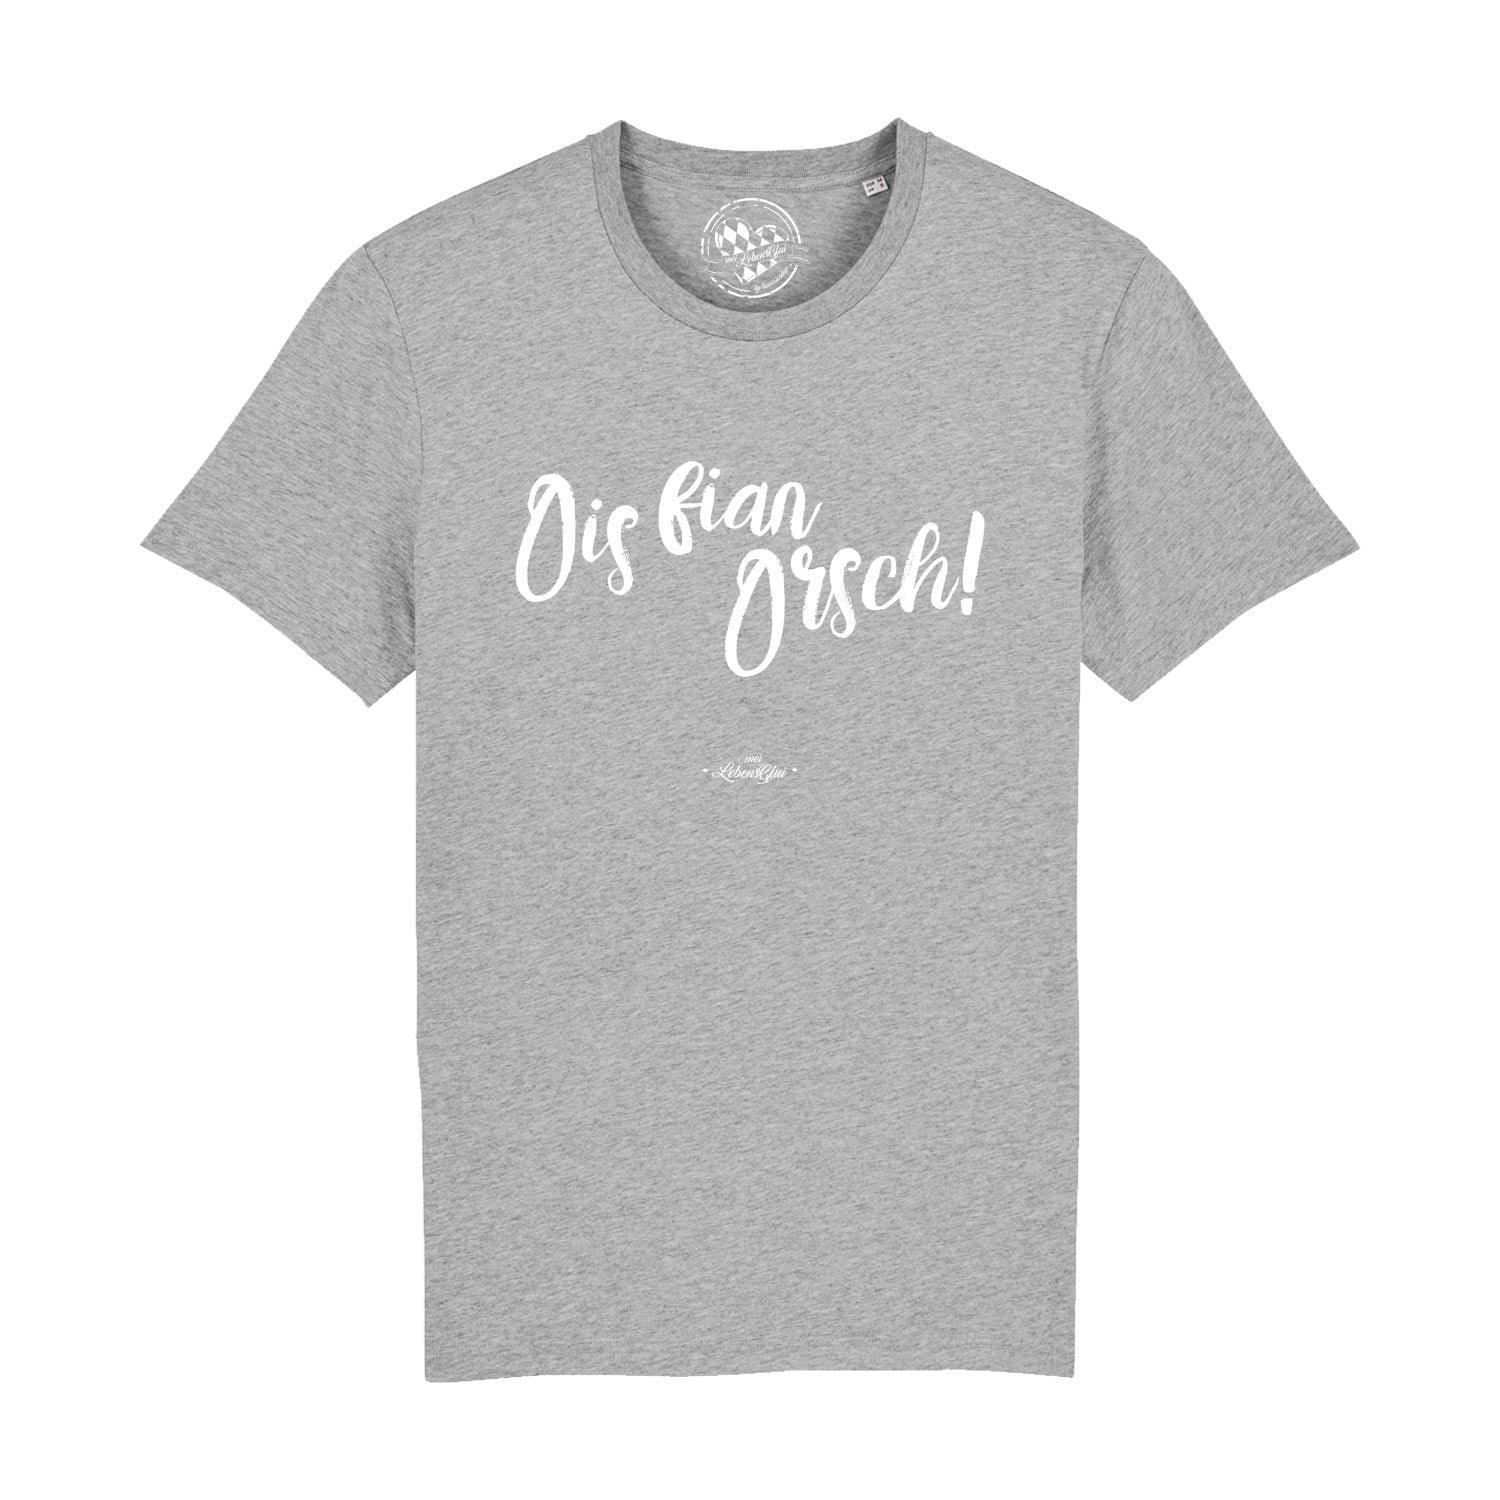 Herren T-Shirt "Ois fian Orsch" - bavariashop - mei LebensGfui